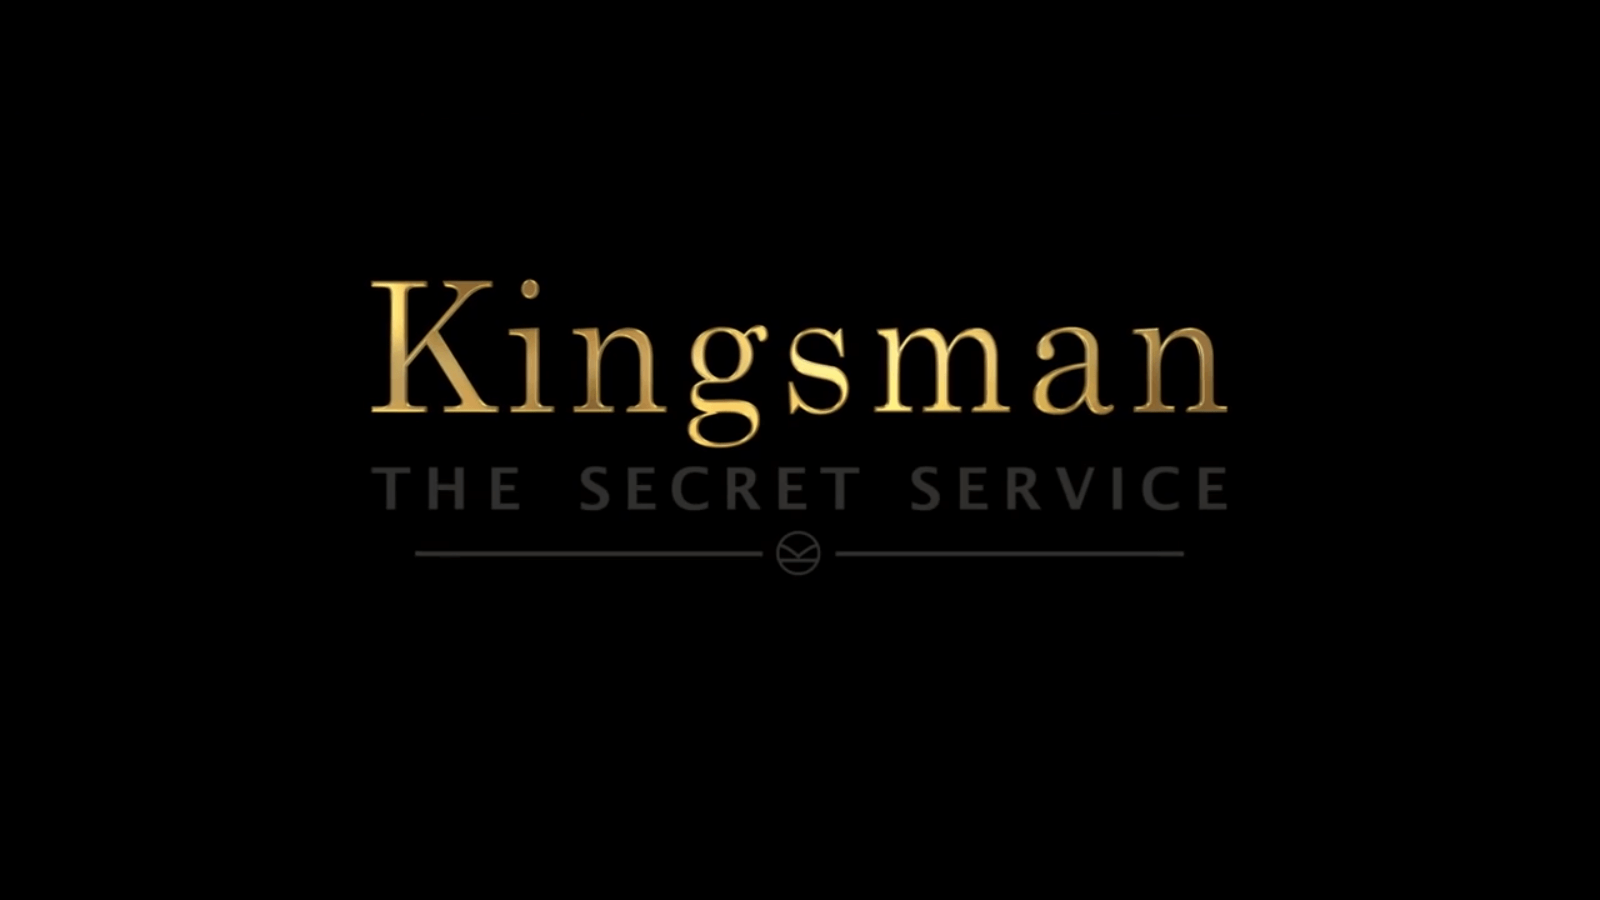 Kingsman: The Secret Service Wallpaper and Background Image